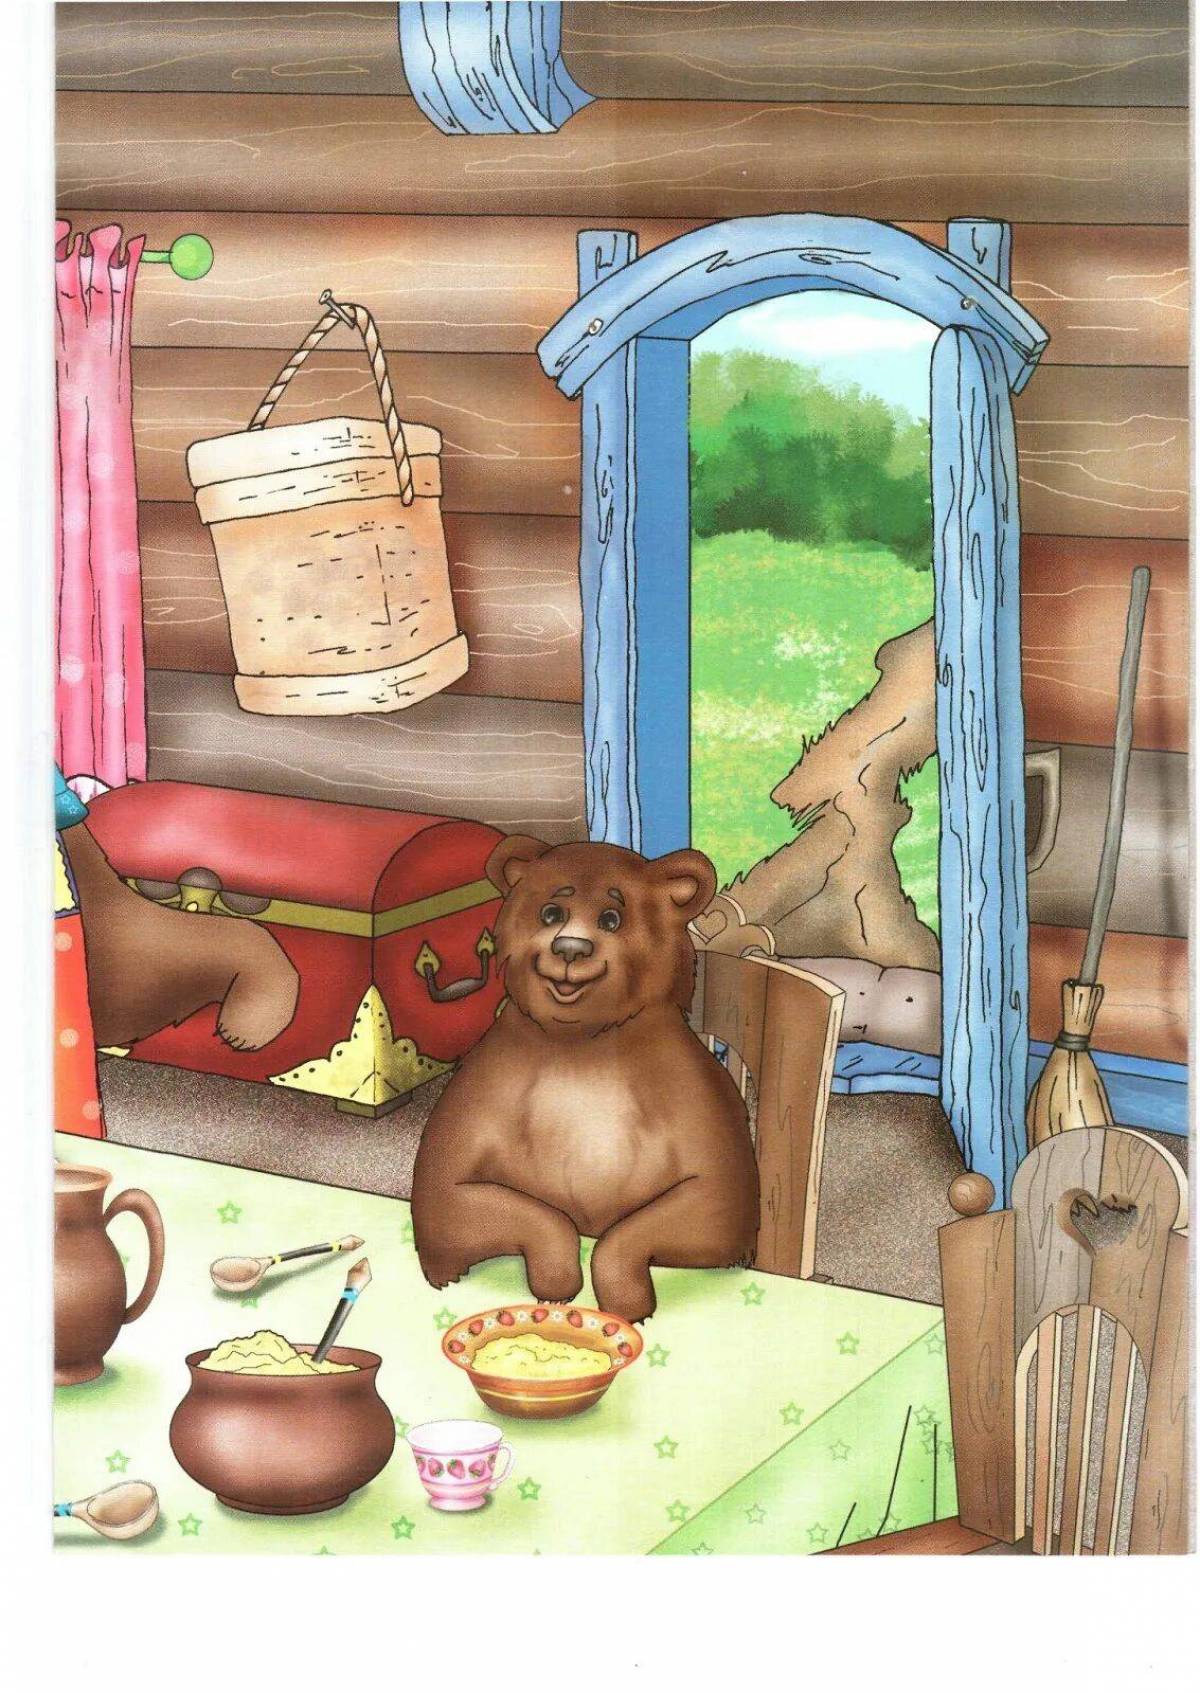 Том три медведя. Три медведя. Три медведя рисунок. Сказка 3 медведя. Иллюстрация 3 медведя.